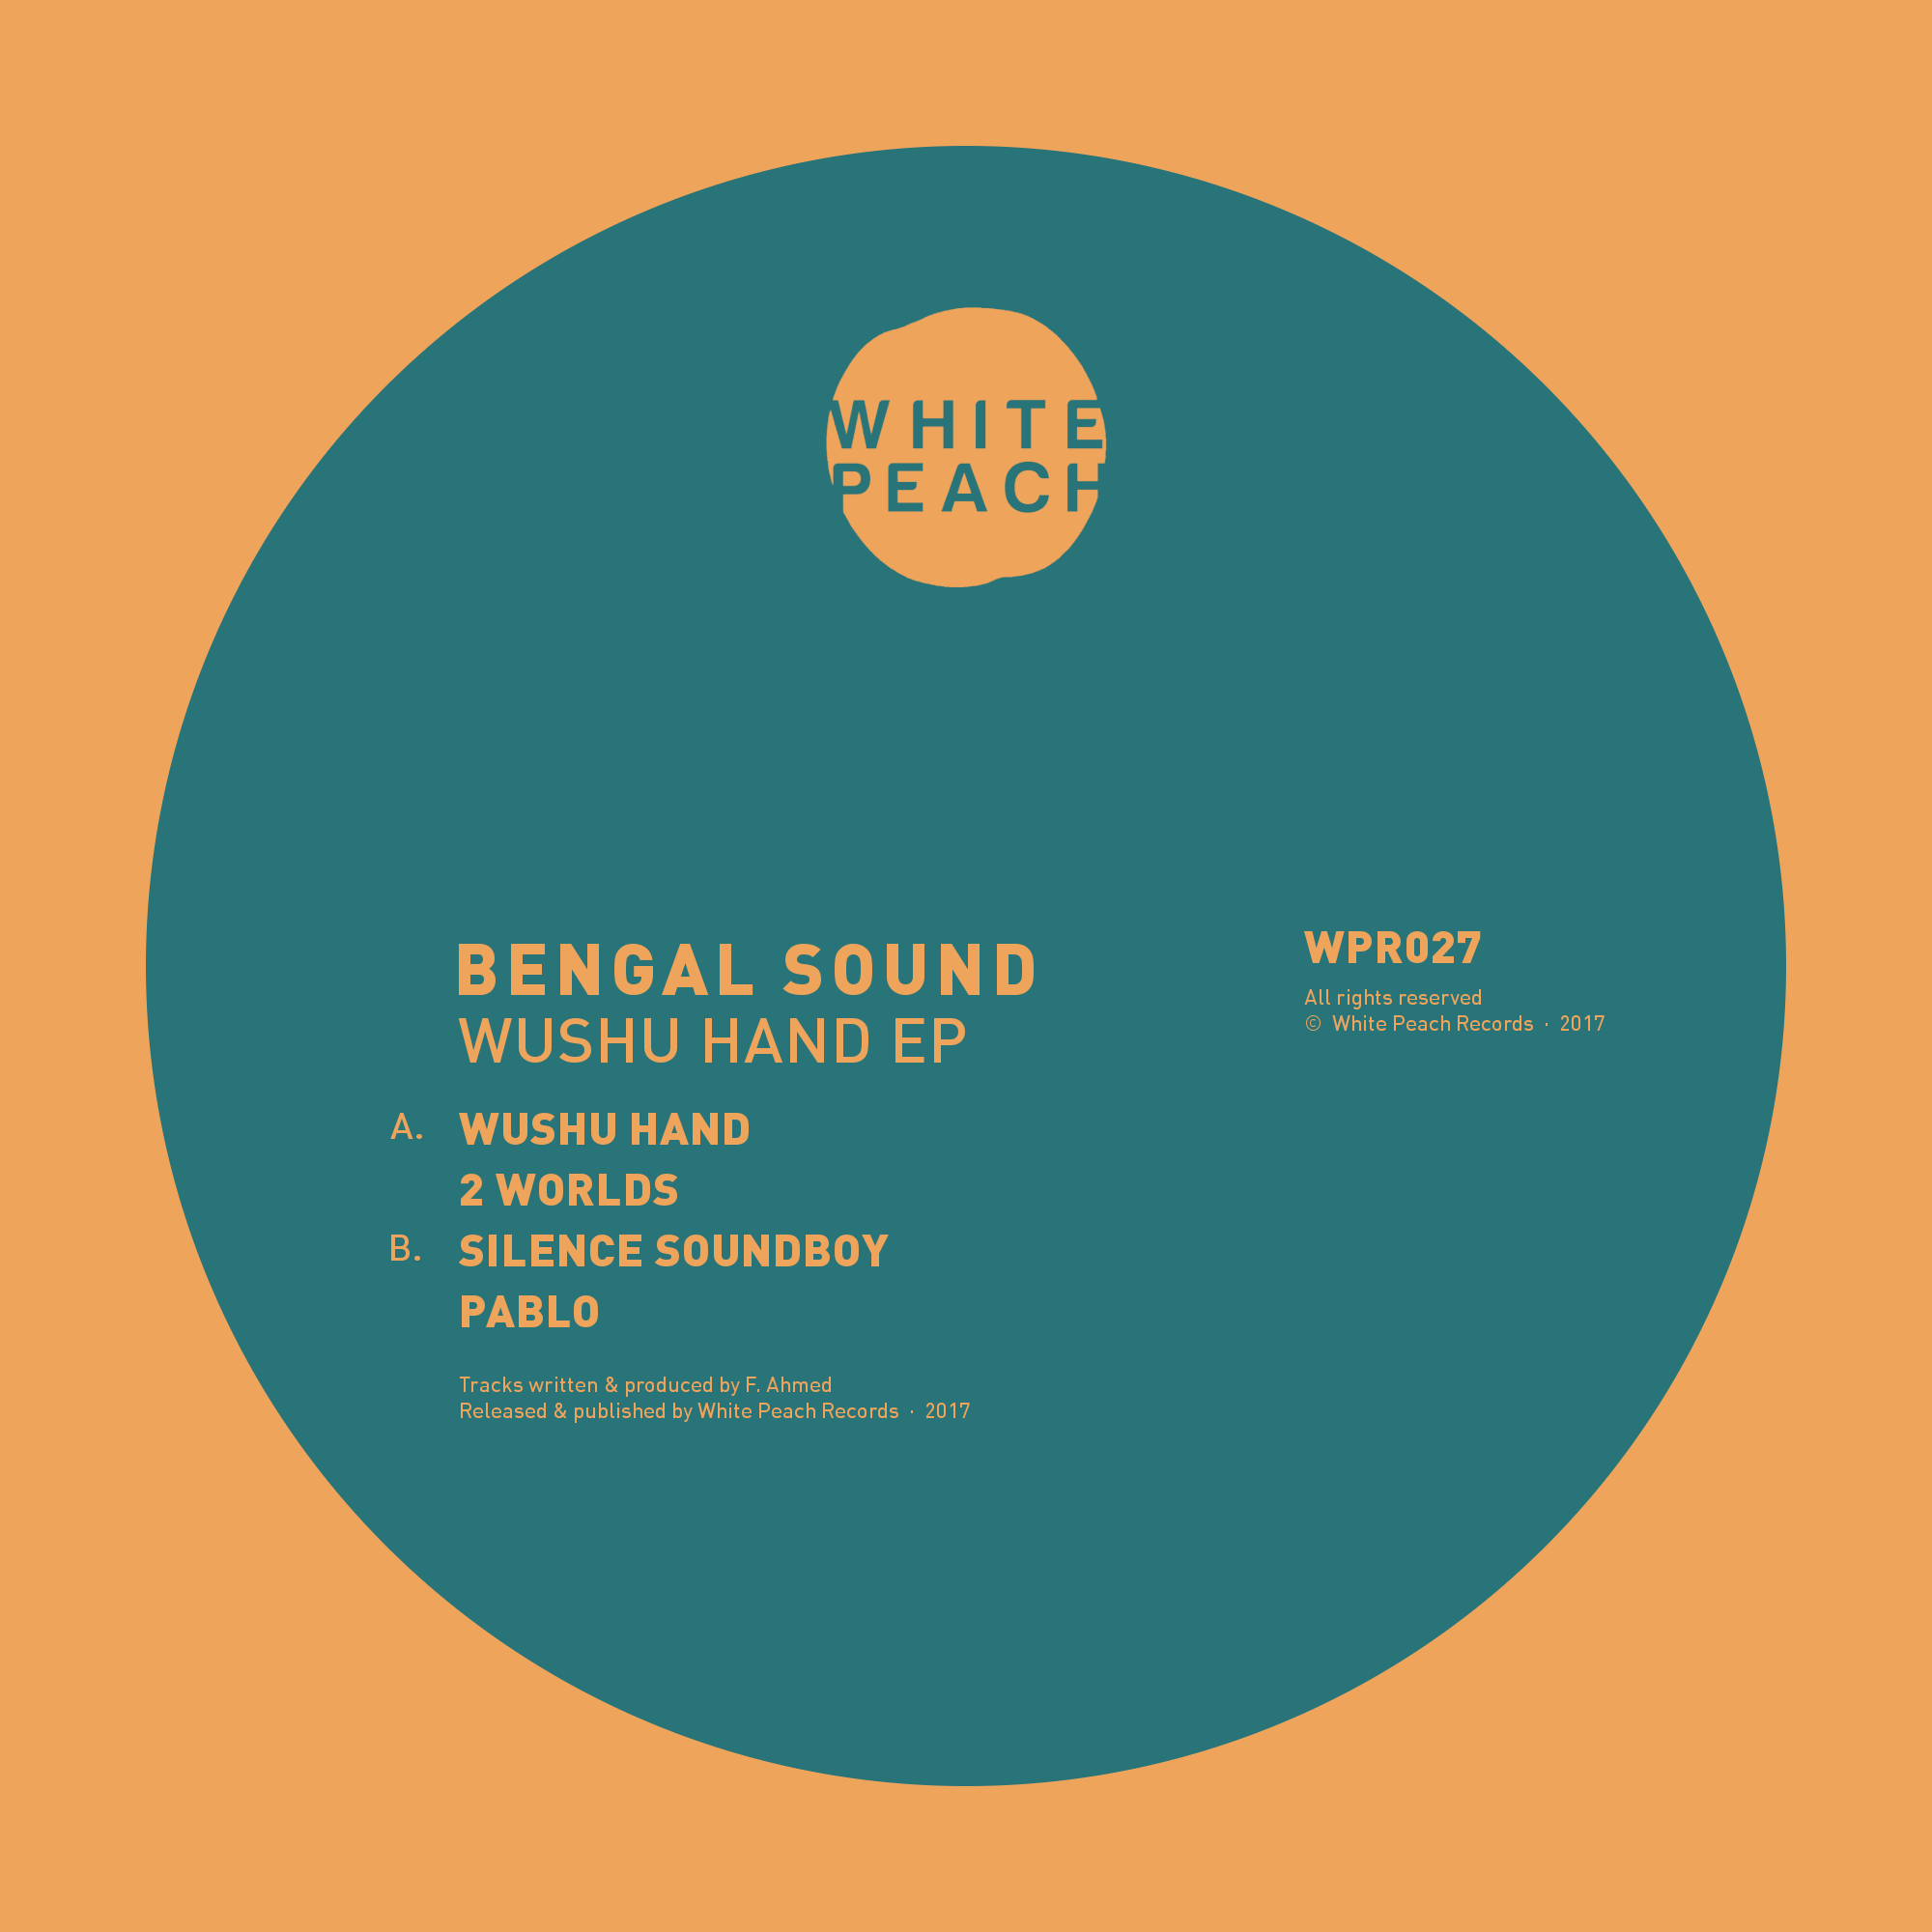 WPR027 (Bengal Sound - Wushu Hand EP, digital artwork).png